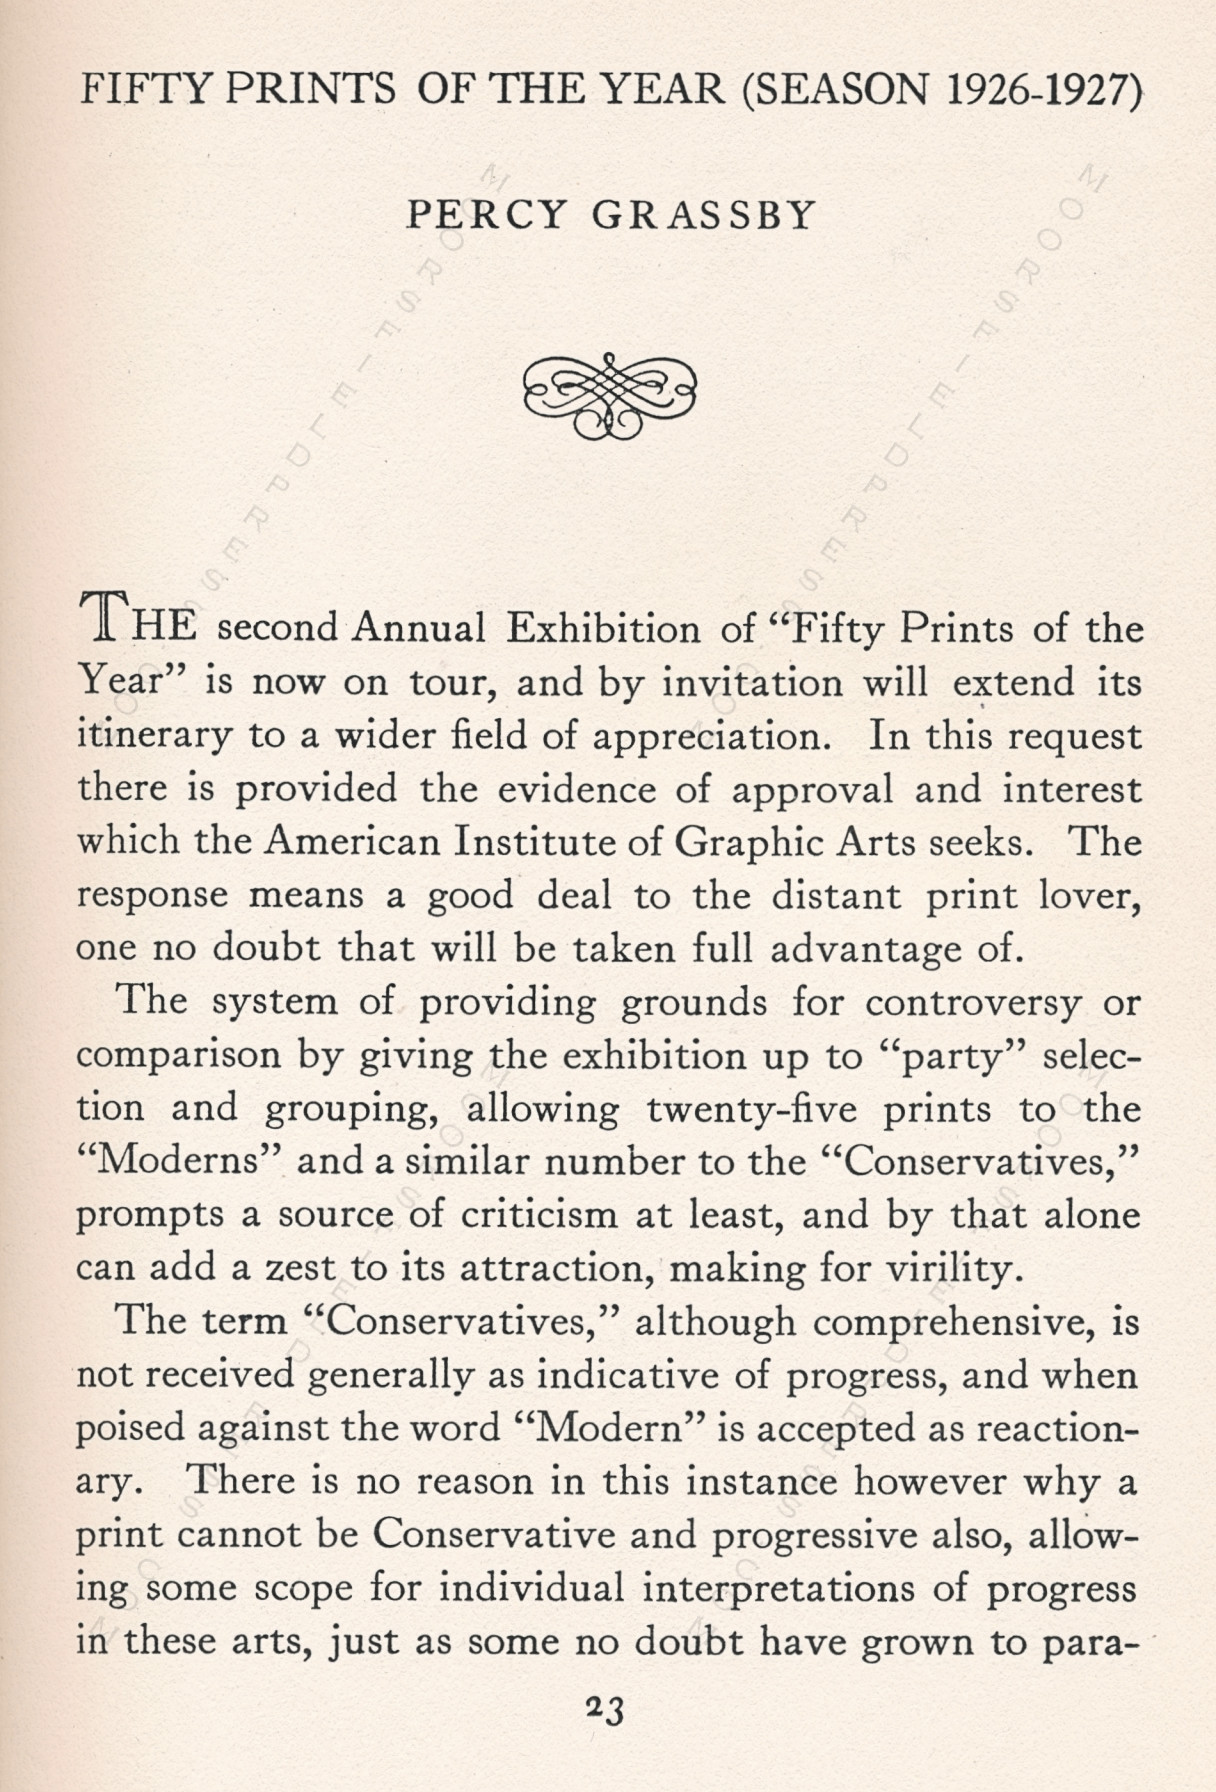 The Print Connoisseur Art Magazine by
                        Winfred Porter Truesdell